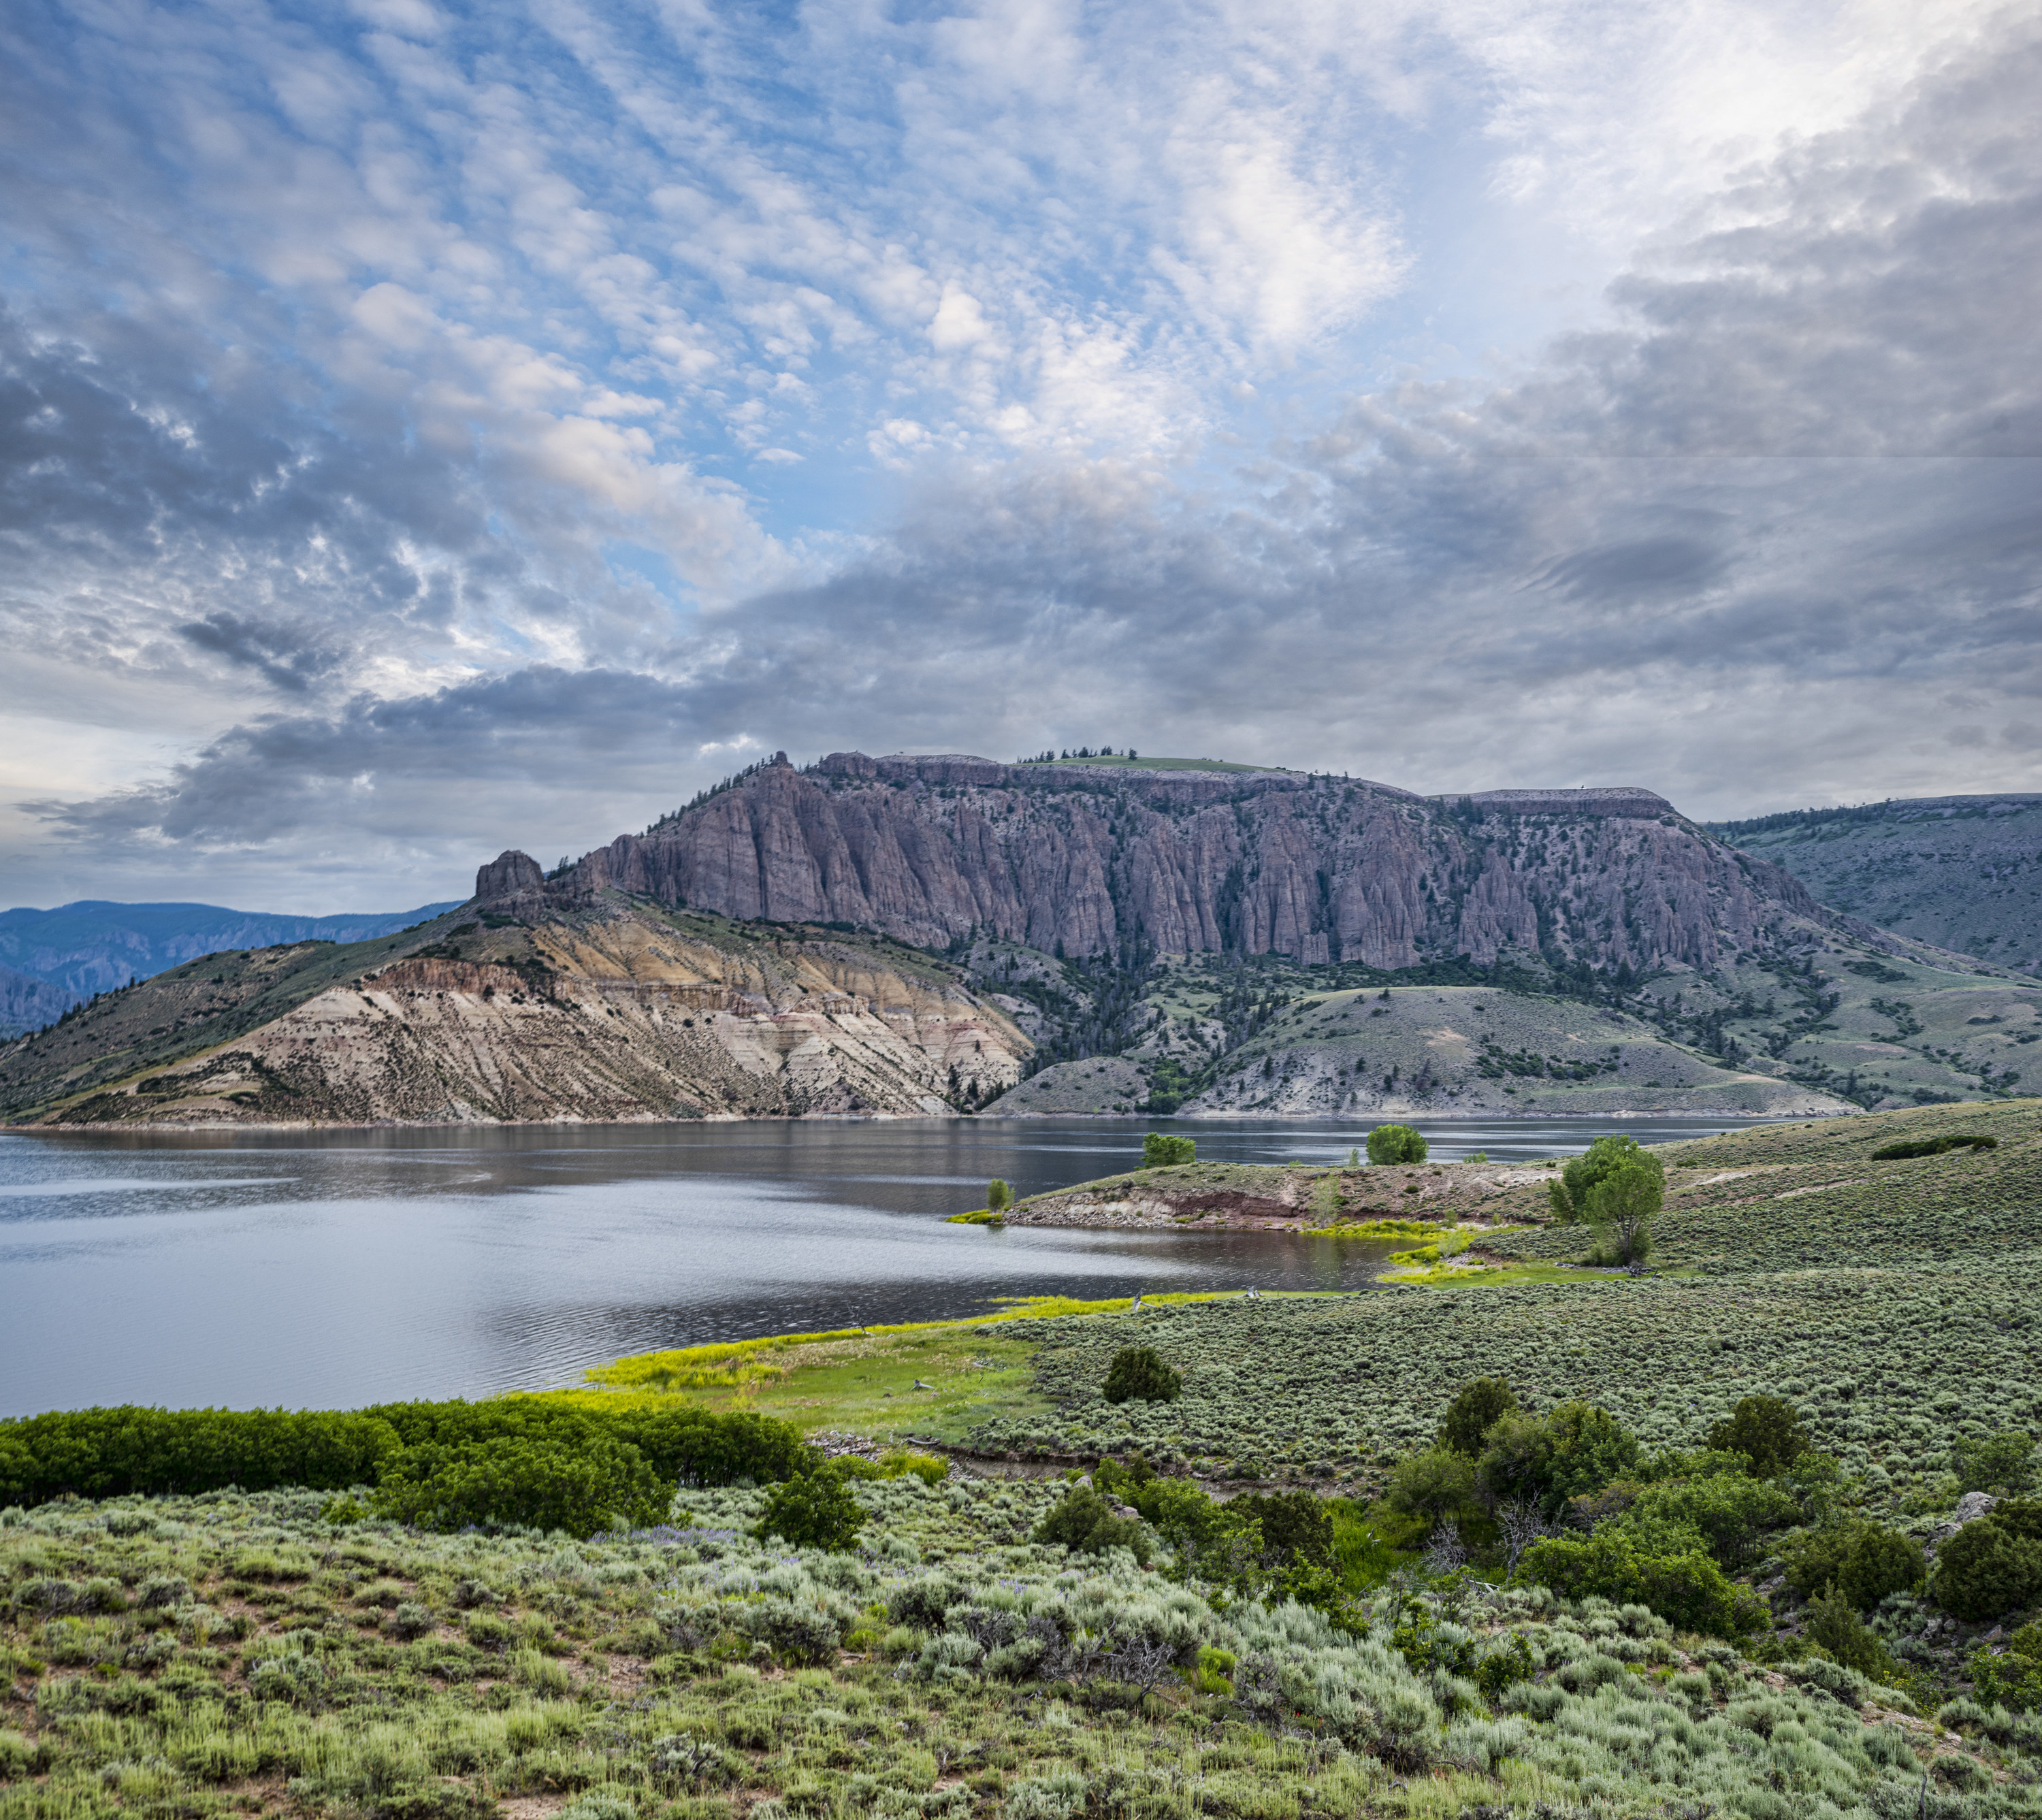 The landscape of Gunnison, Colorado